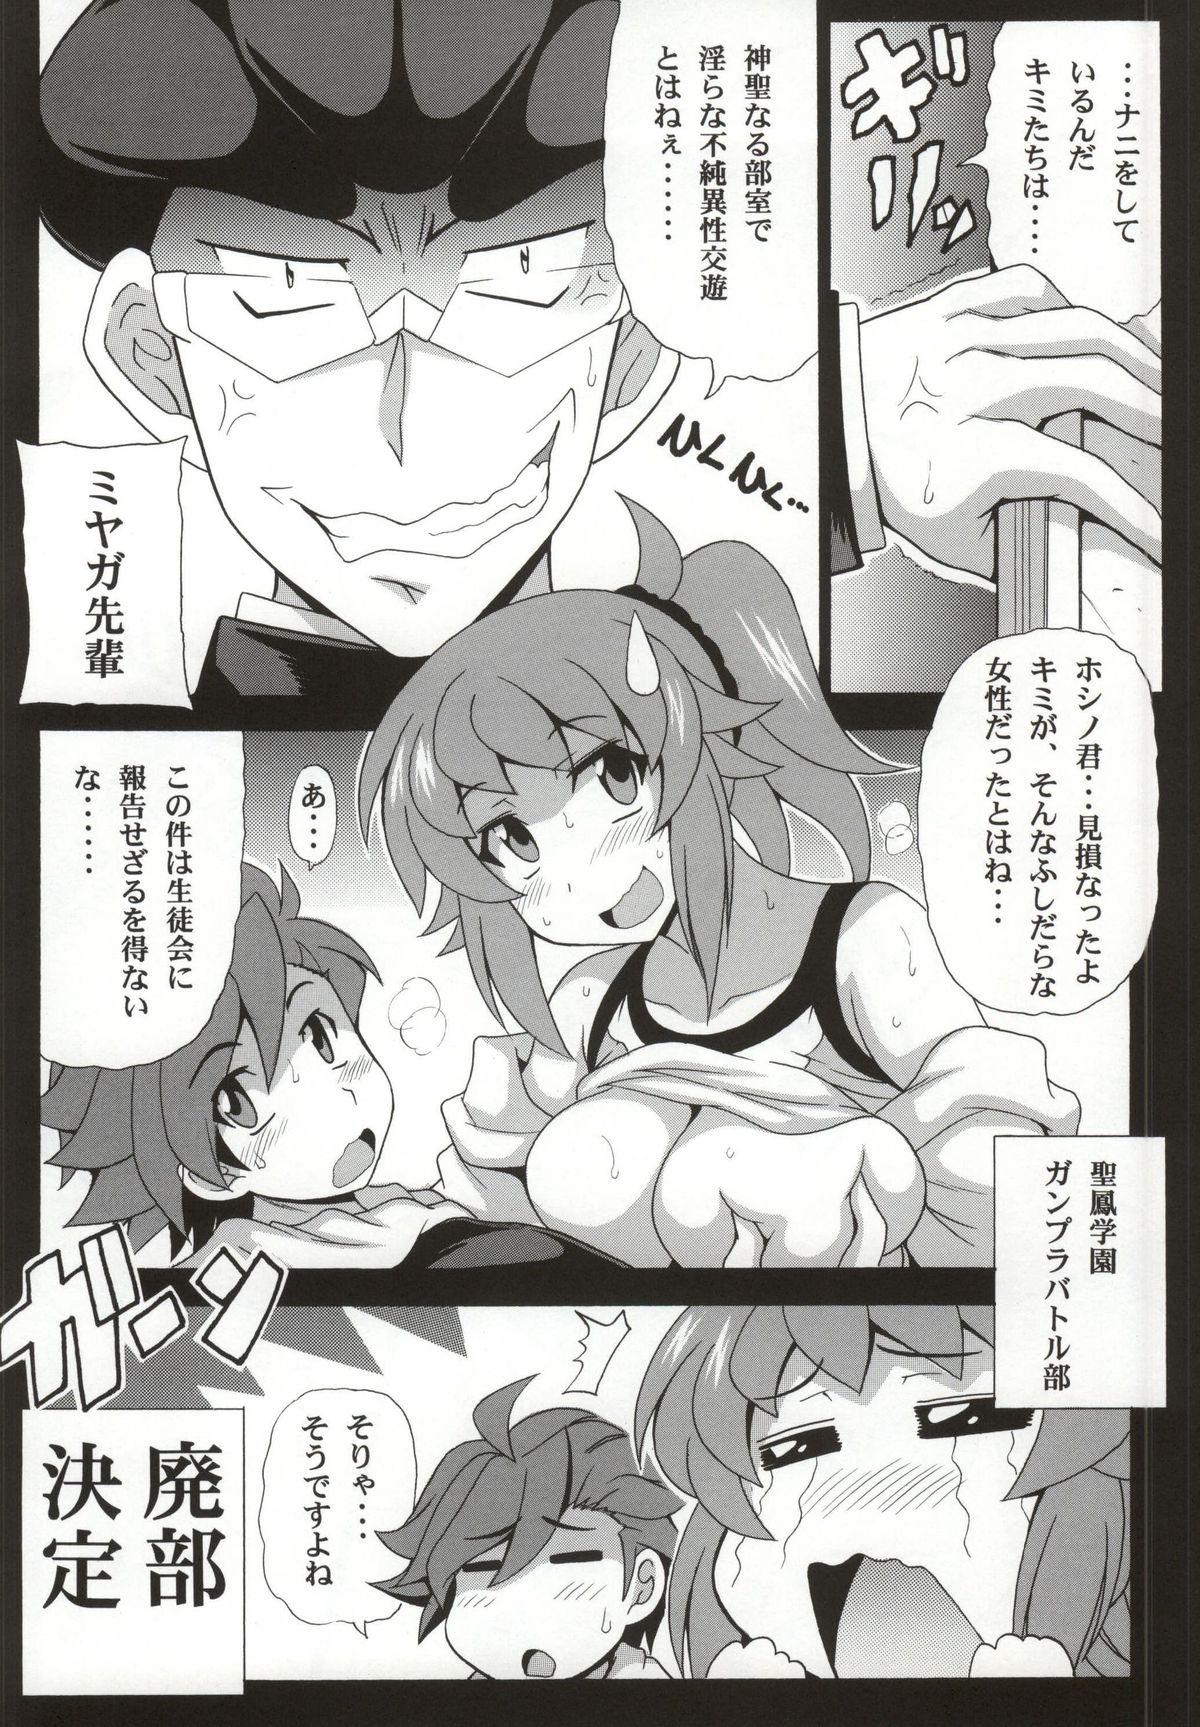 Chacal Fumina Senpai to H na Gunpla Battle - Gundam build fighters try Kissing - Page 12